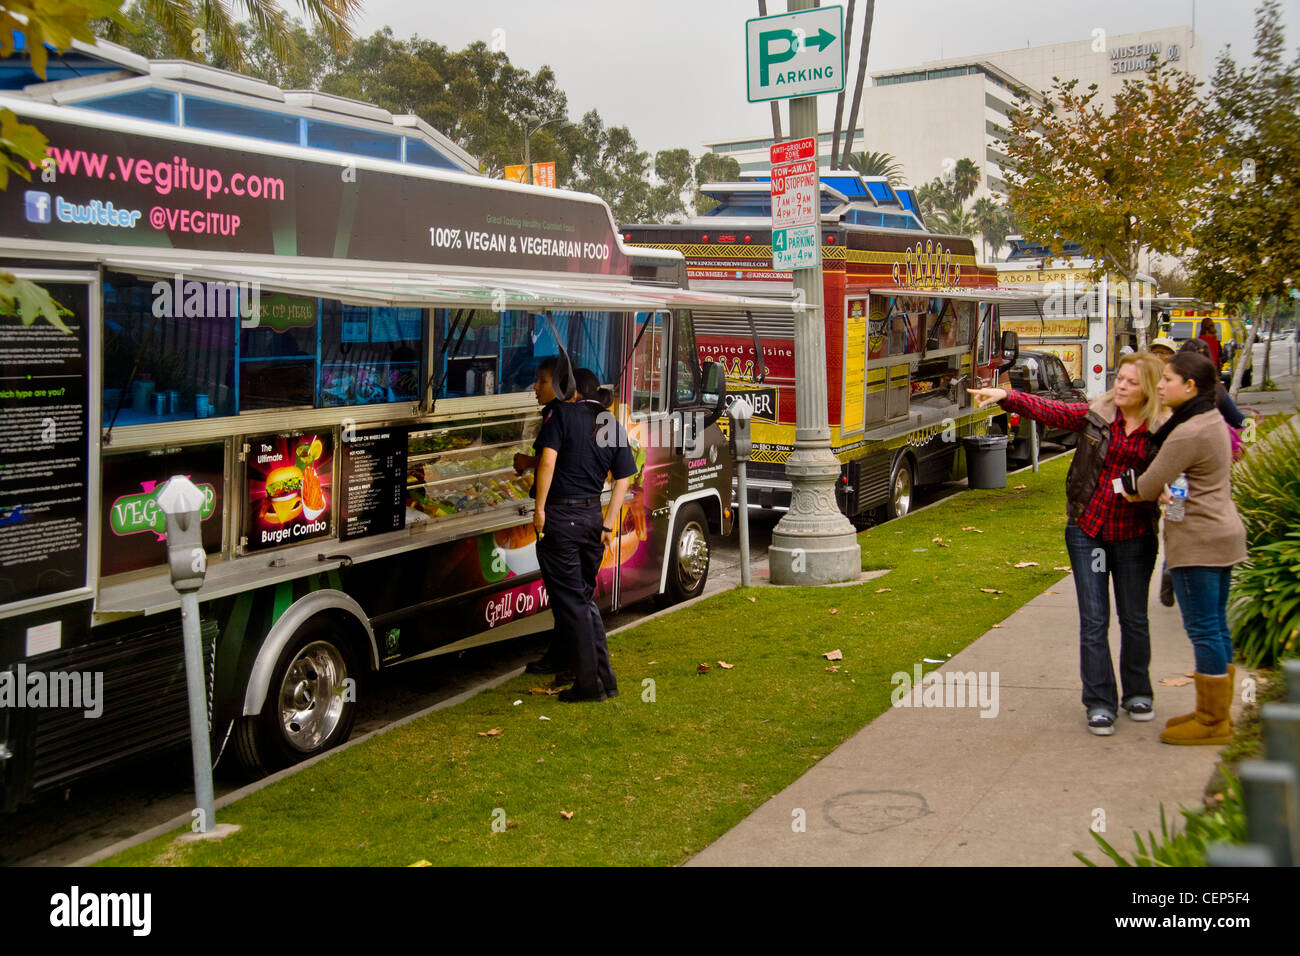 Gourmet food vans serve noontime lunch on Wilshire Boulevard, Los Angeles. Stock Photo